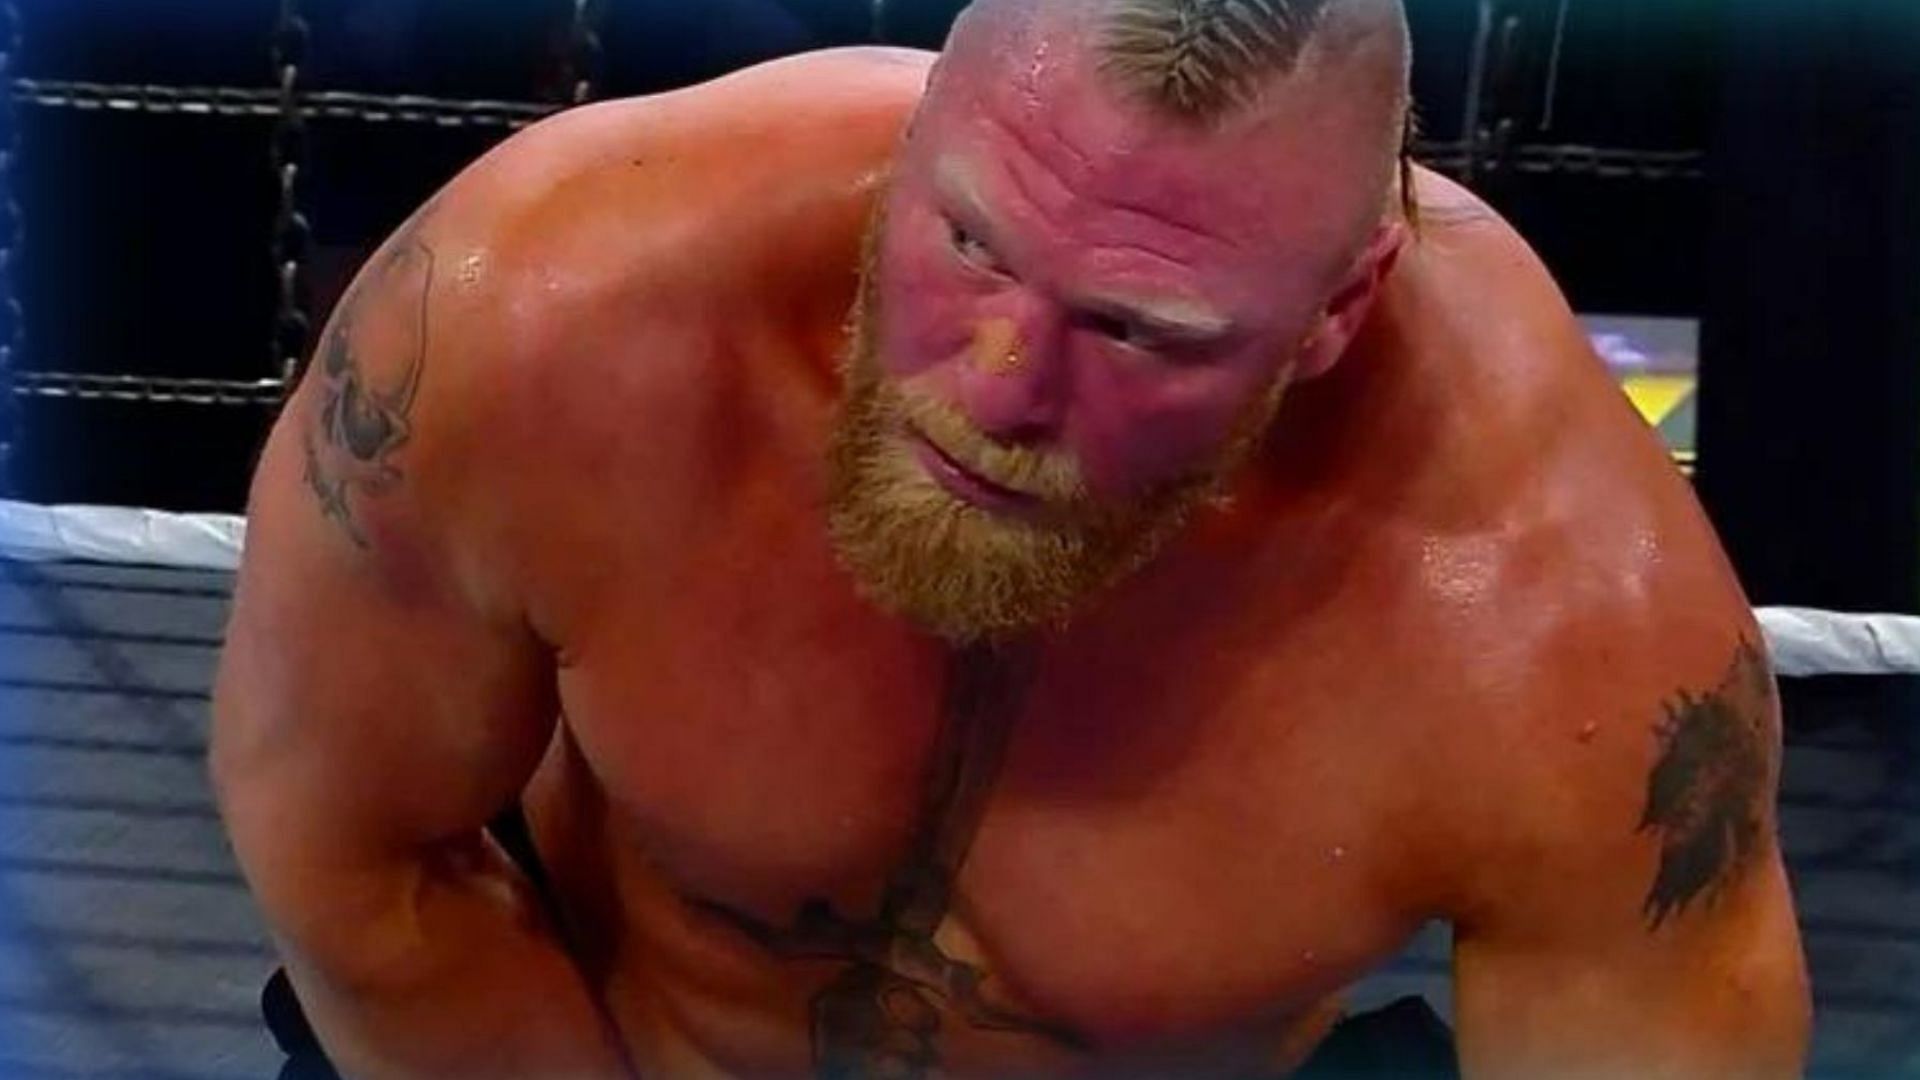 Brock Lesnar had a rough WWE RAW